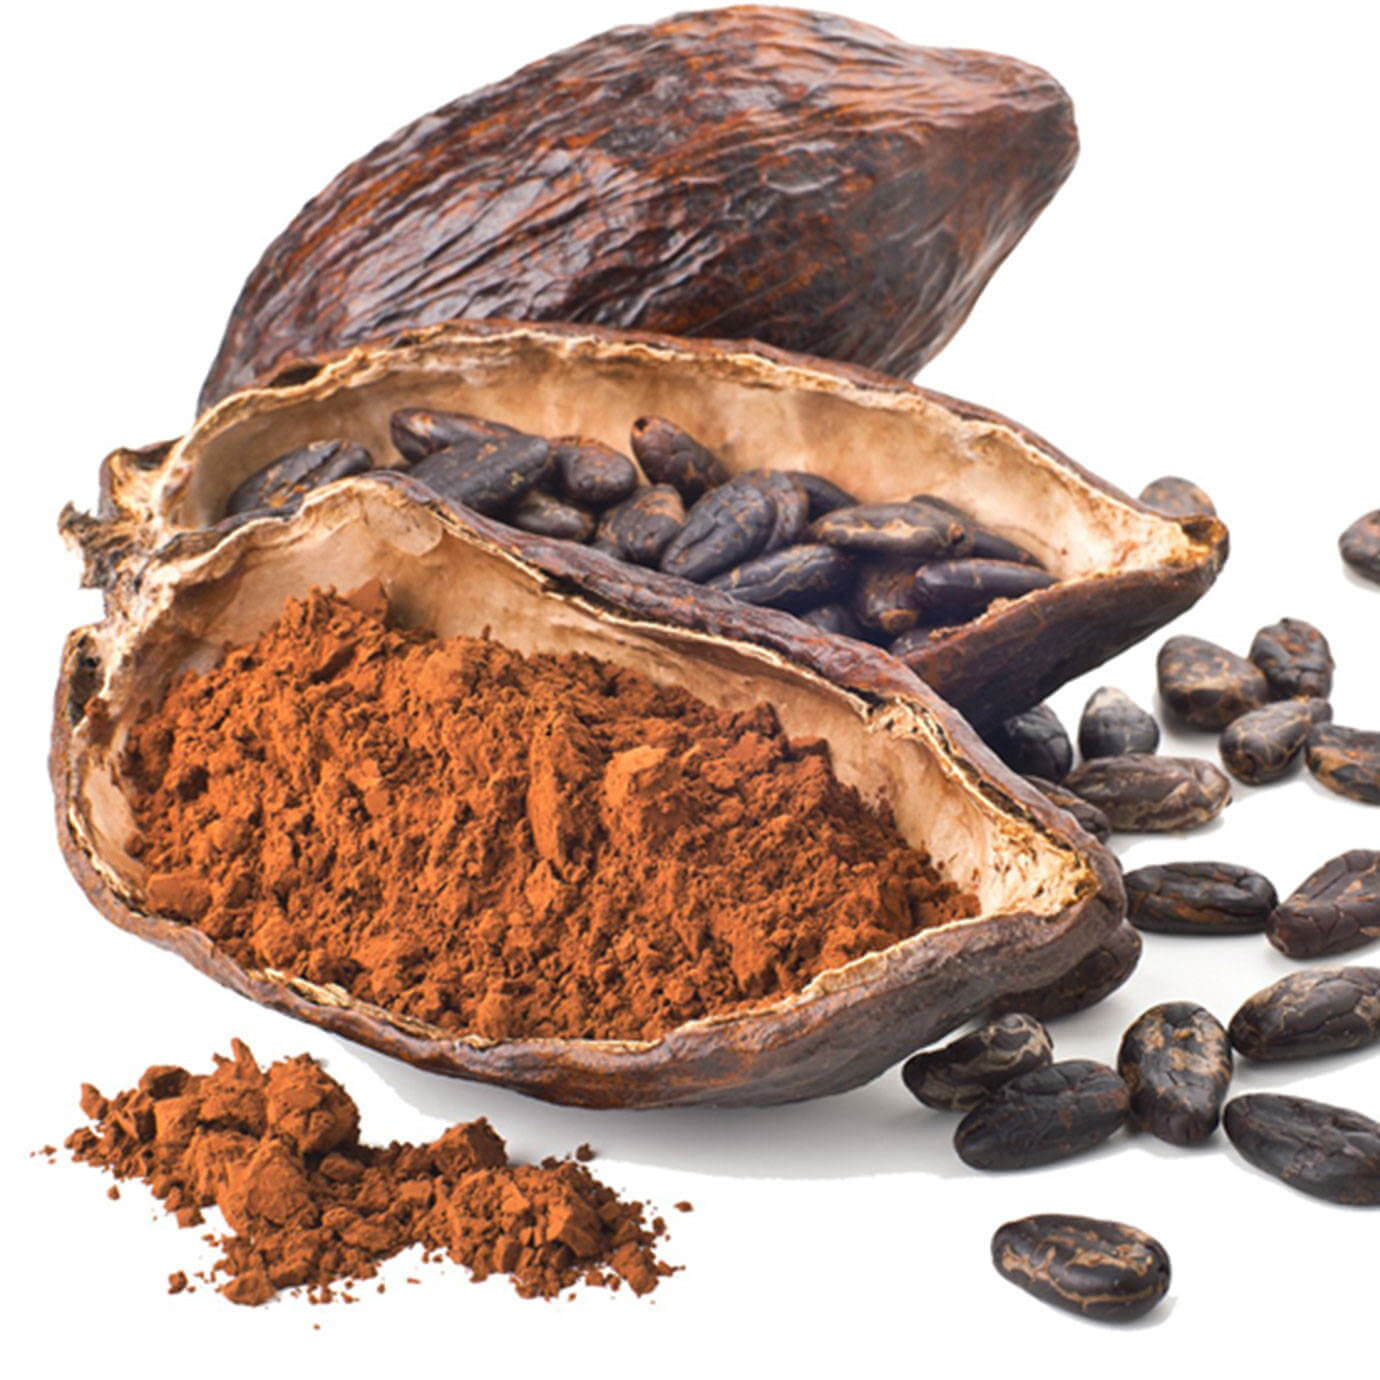 Cacao pod image